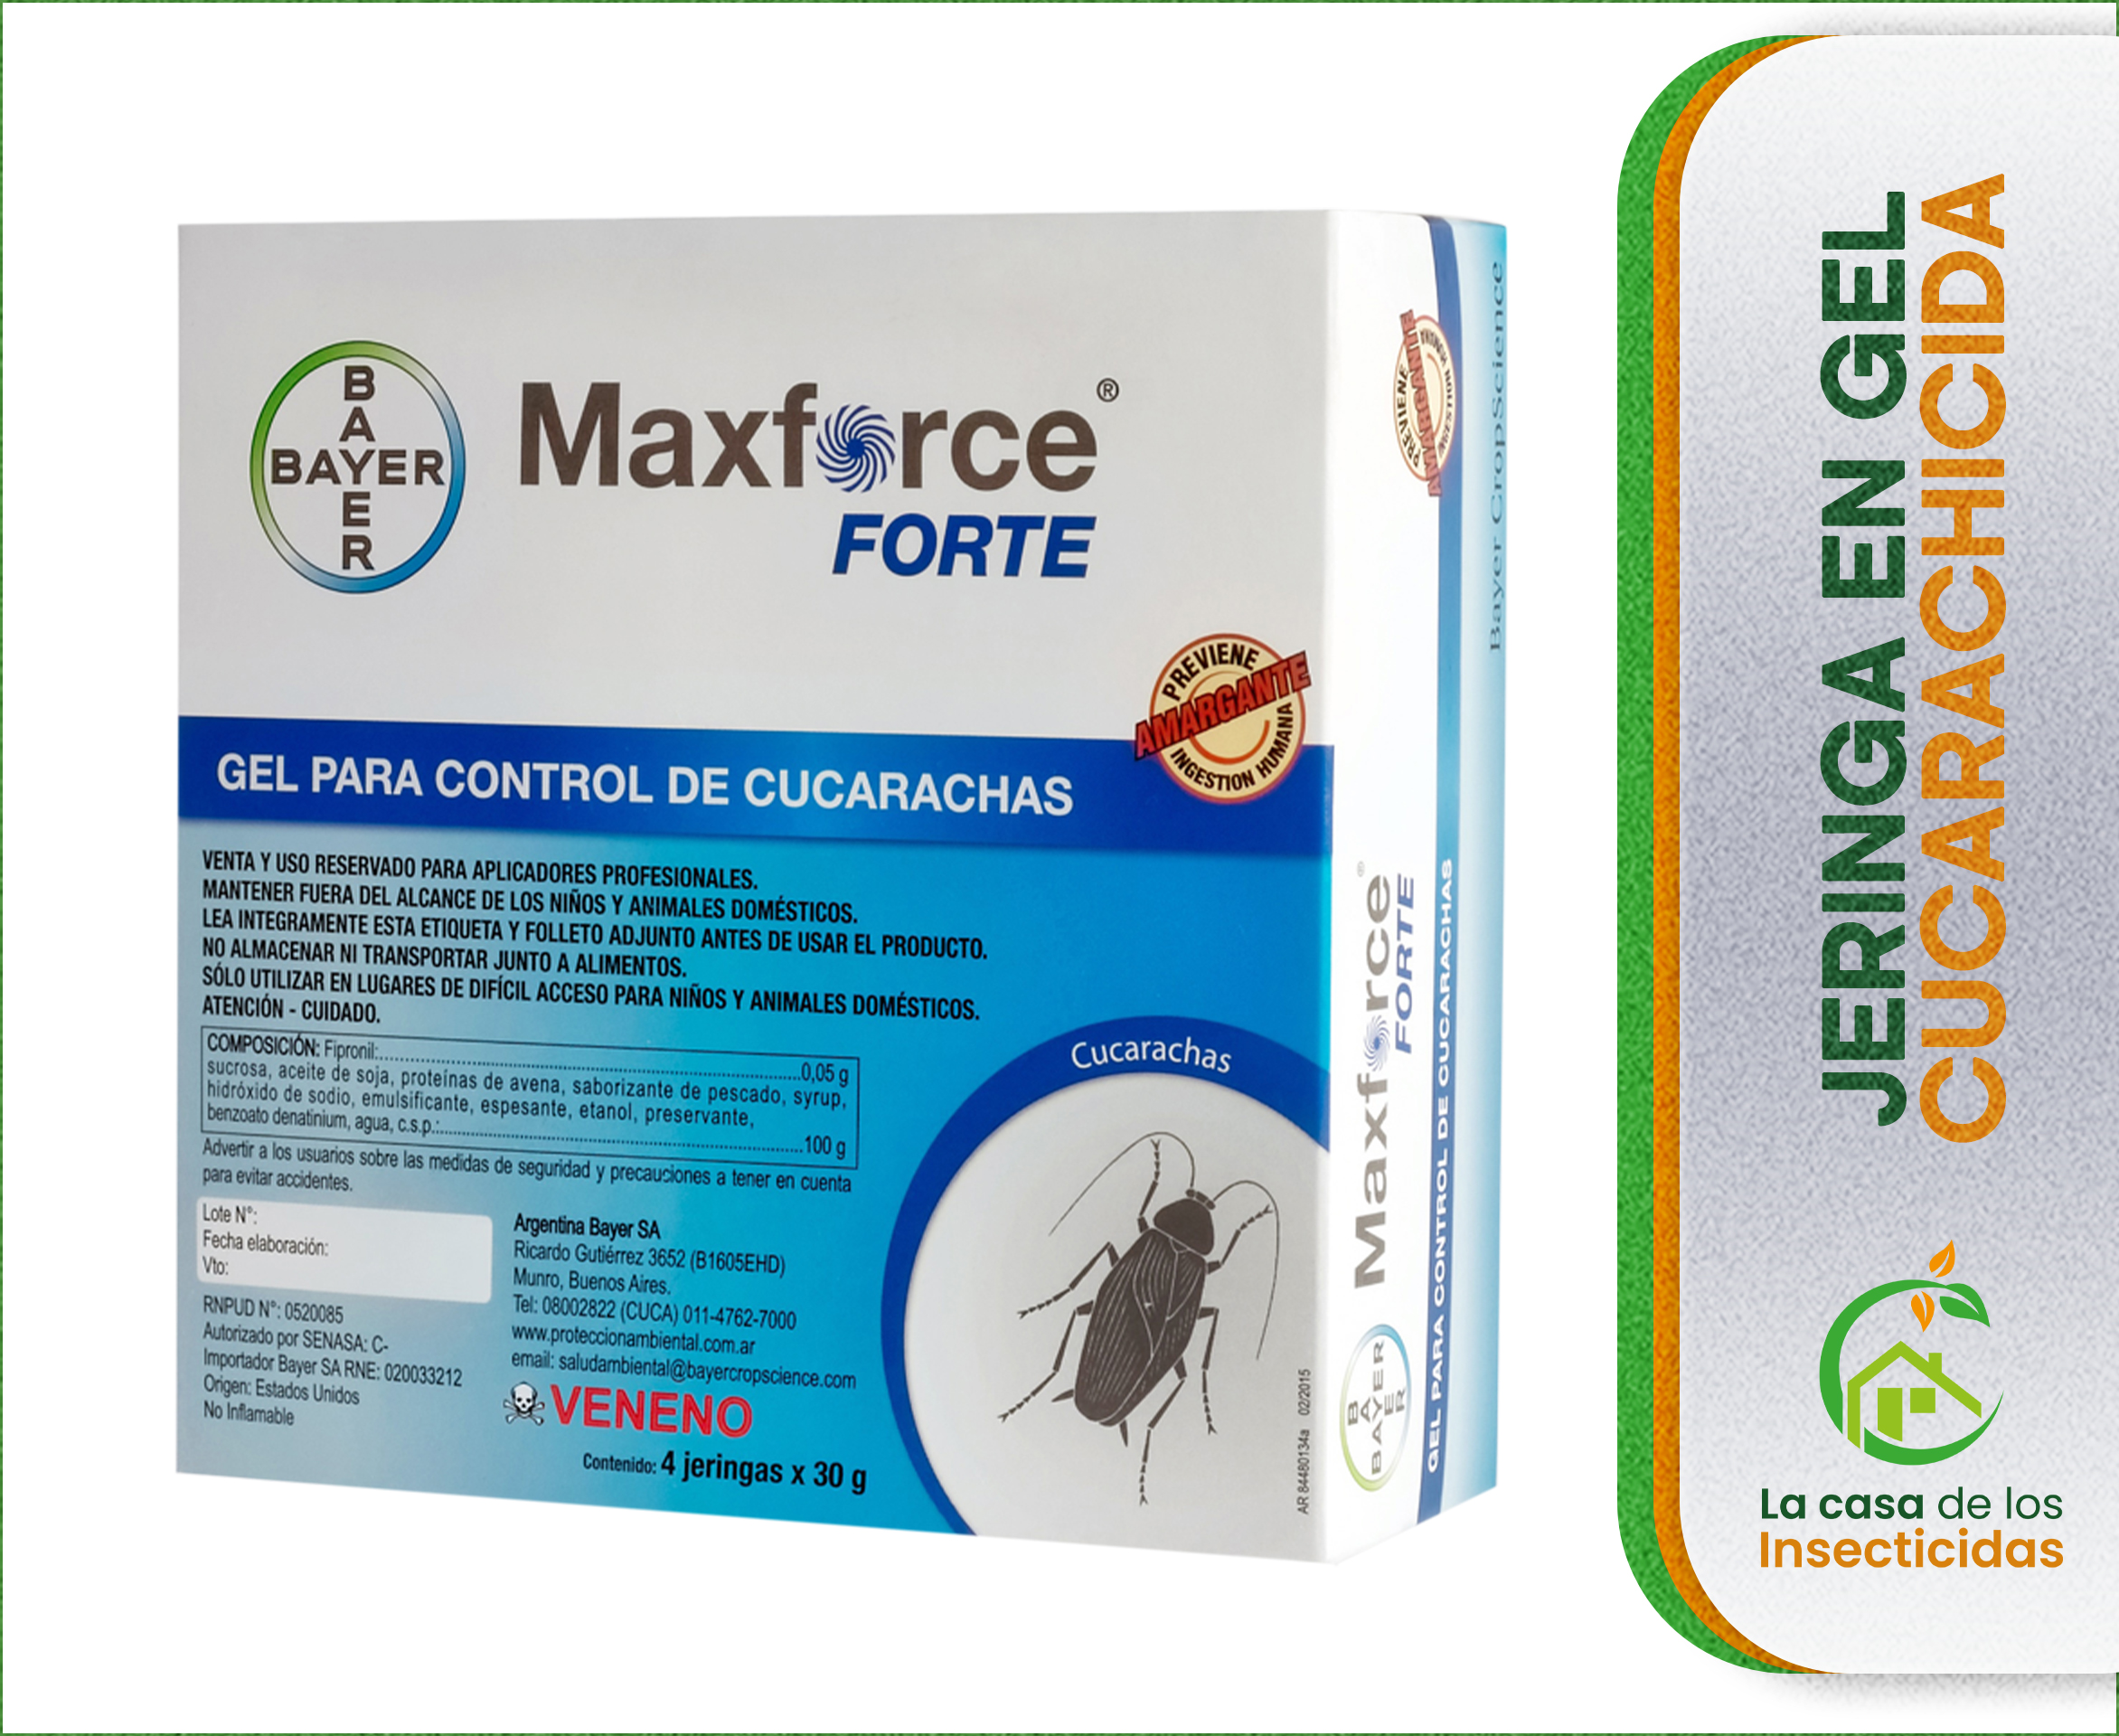 Maxforce Forte gel cucarachicida by Bayer. Hecho en USA.